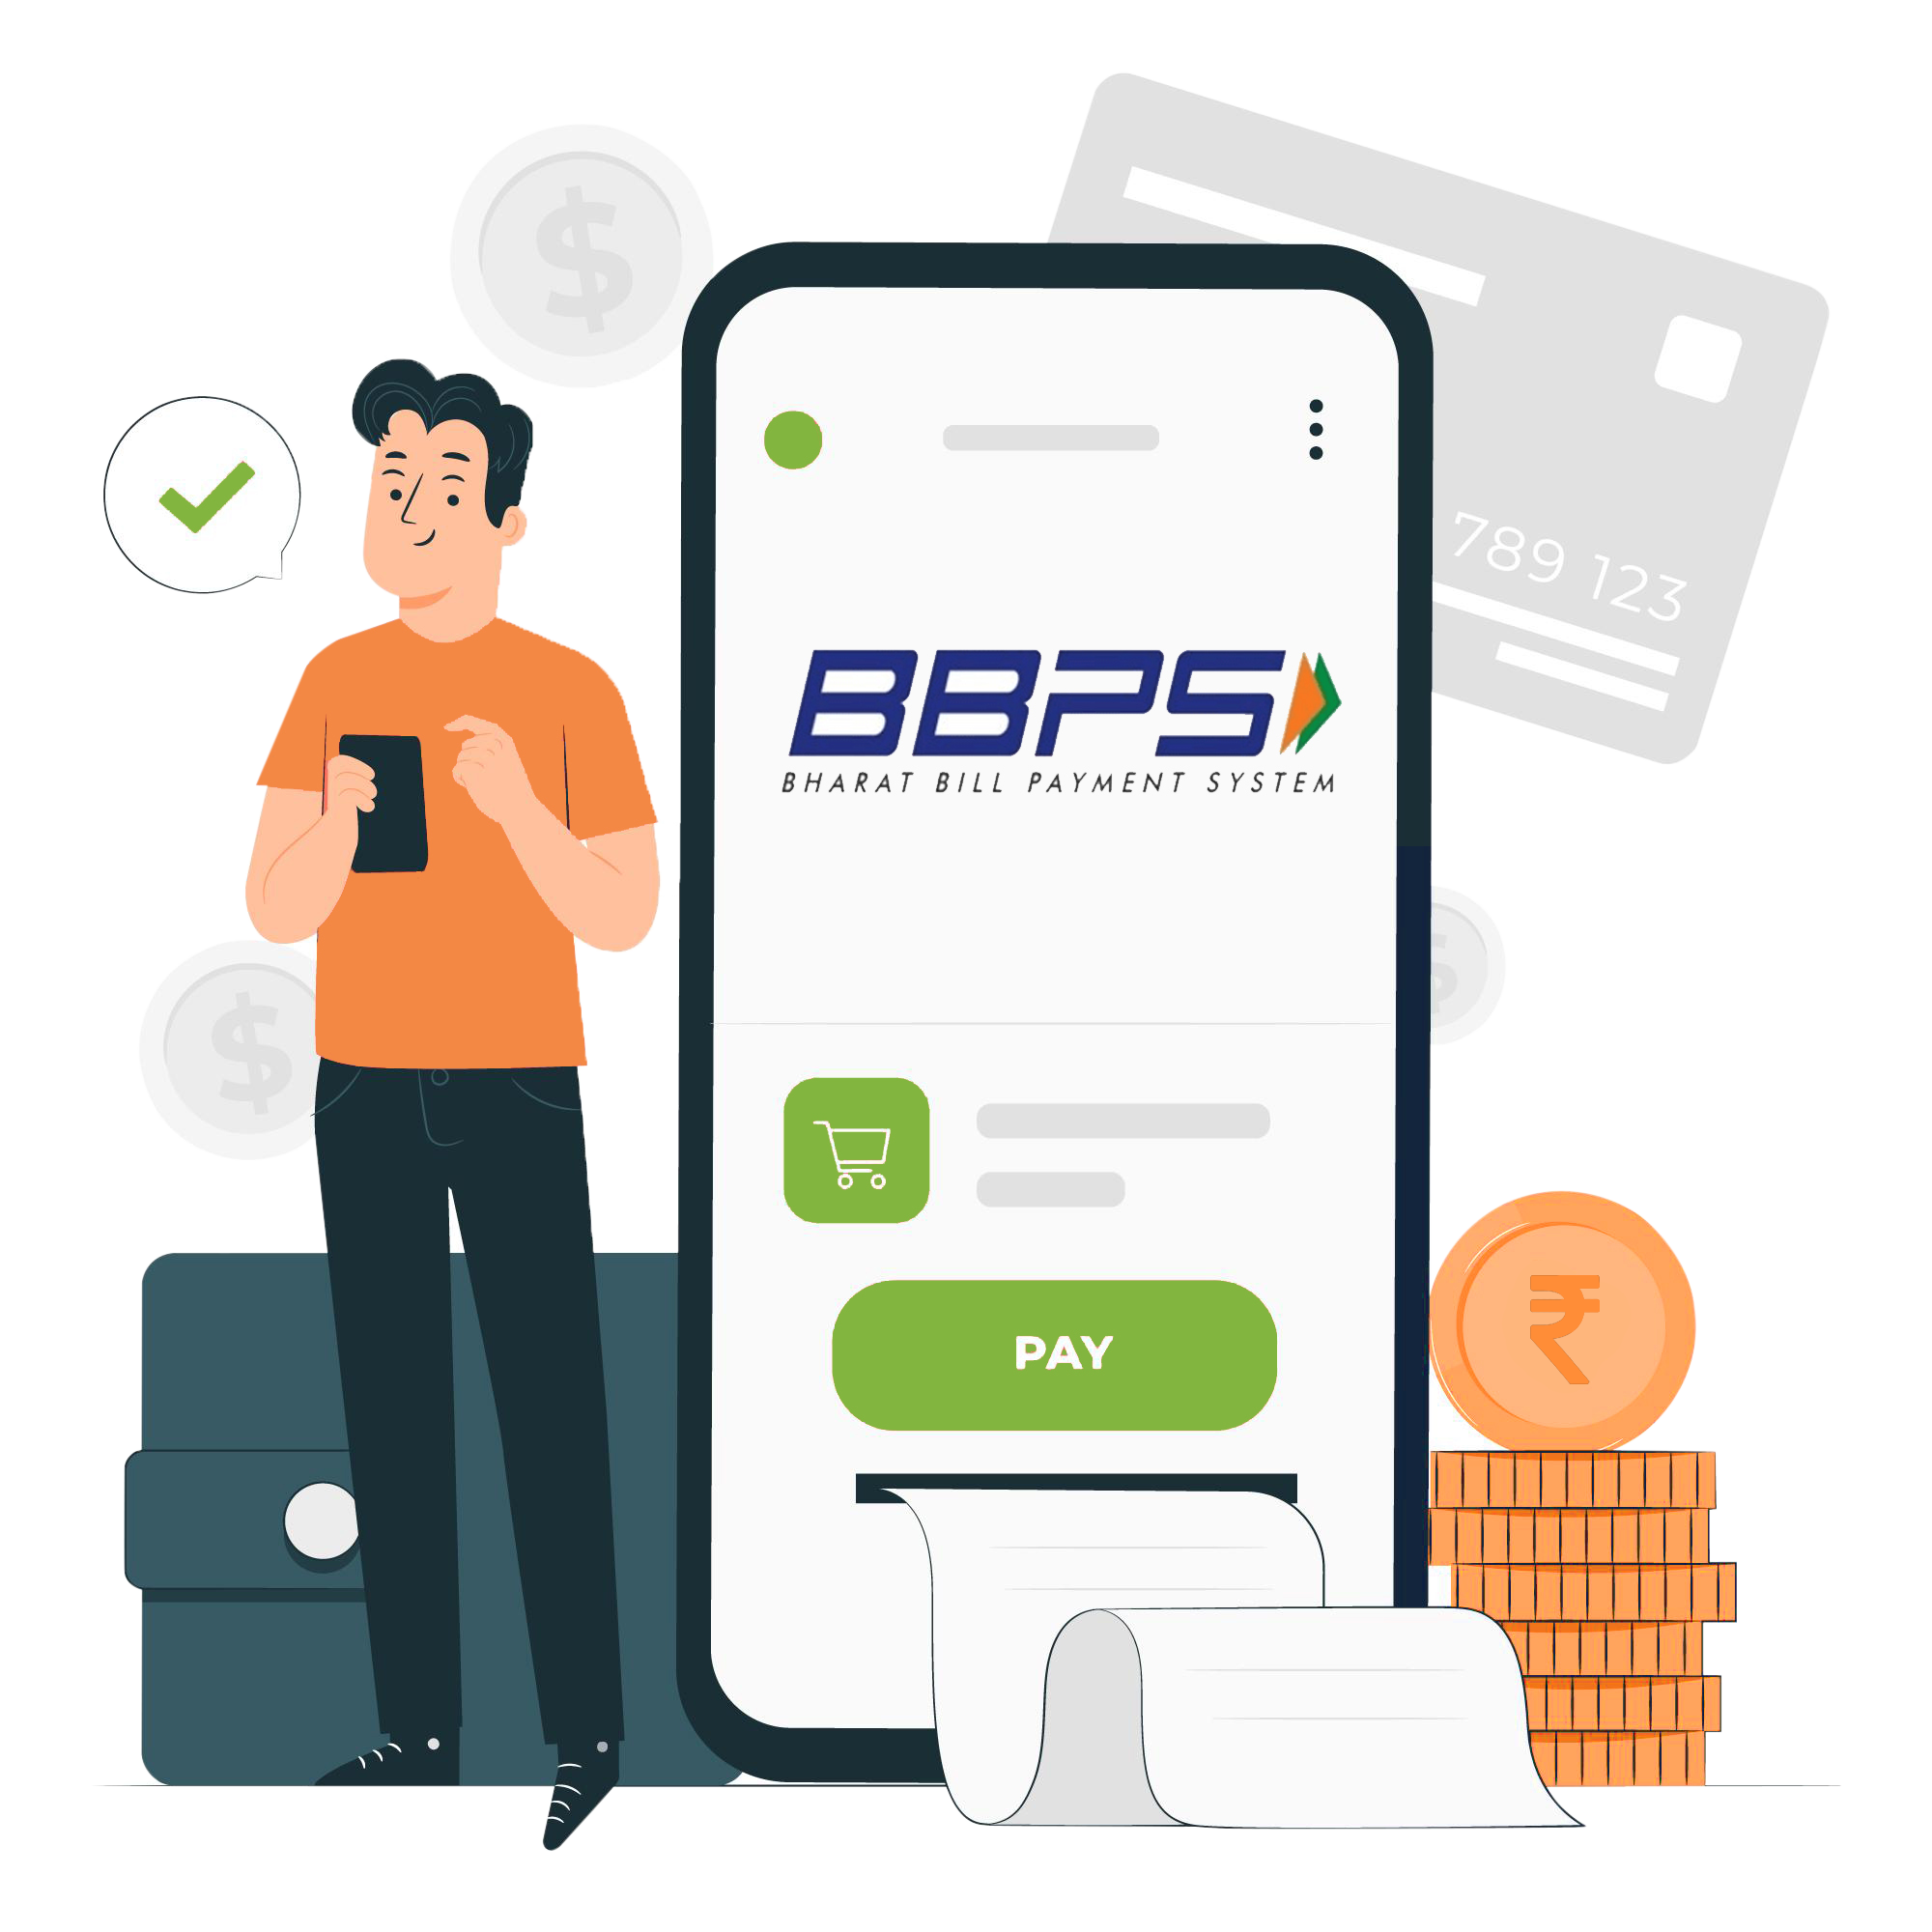 bbps service provider